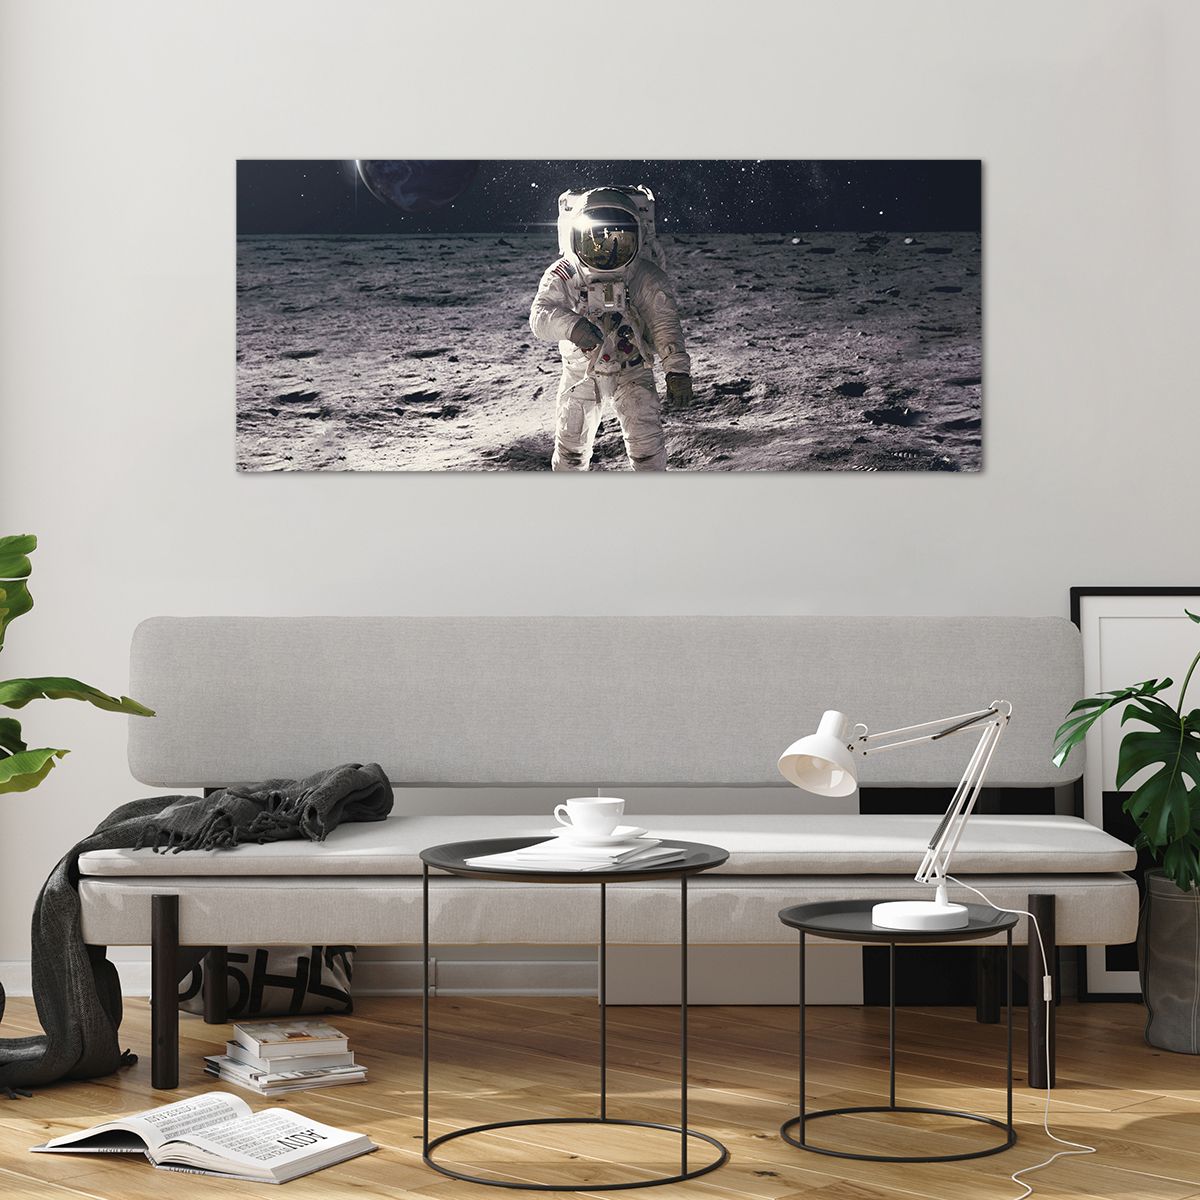 Bild på glas Abstraktion, Bild på glas Man På Månen, Bild på glas Astronaut, Bild på glas Kosmos, Bild på glas Måne